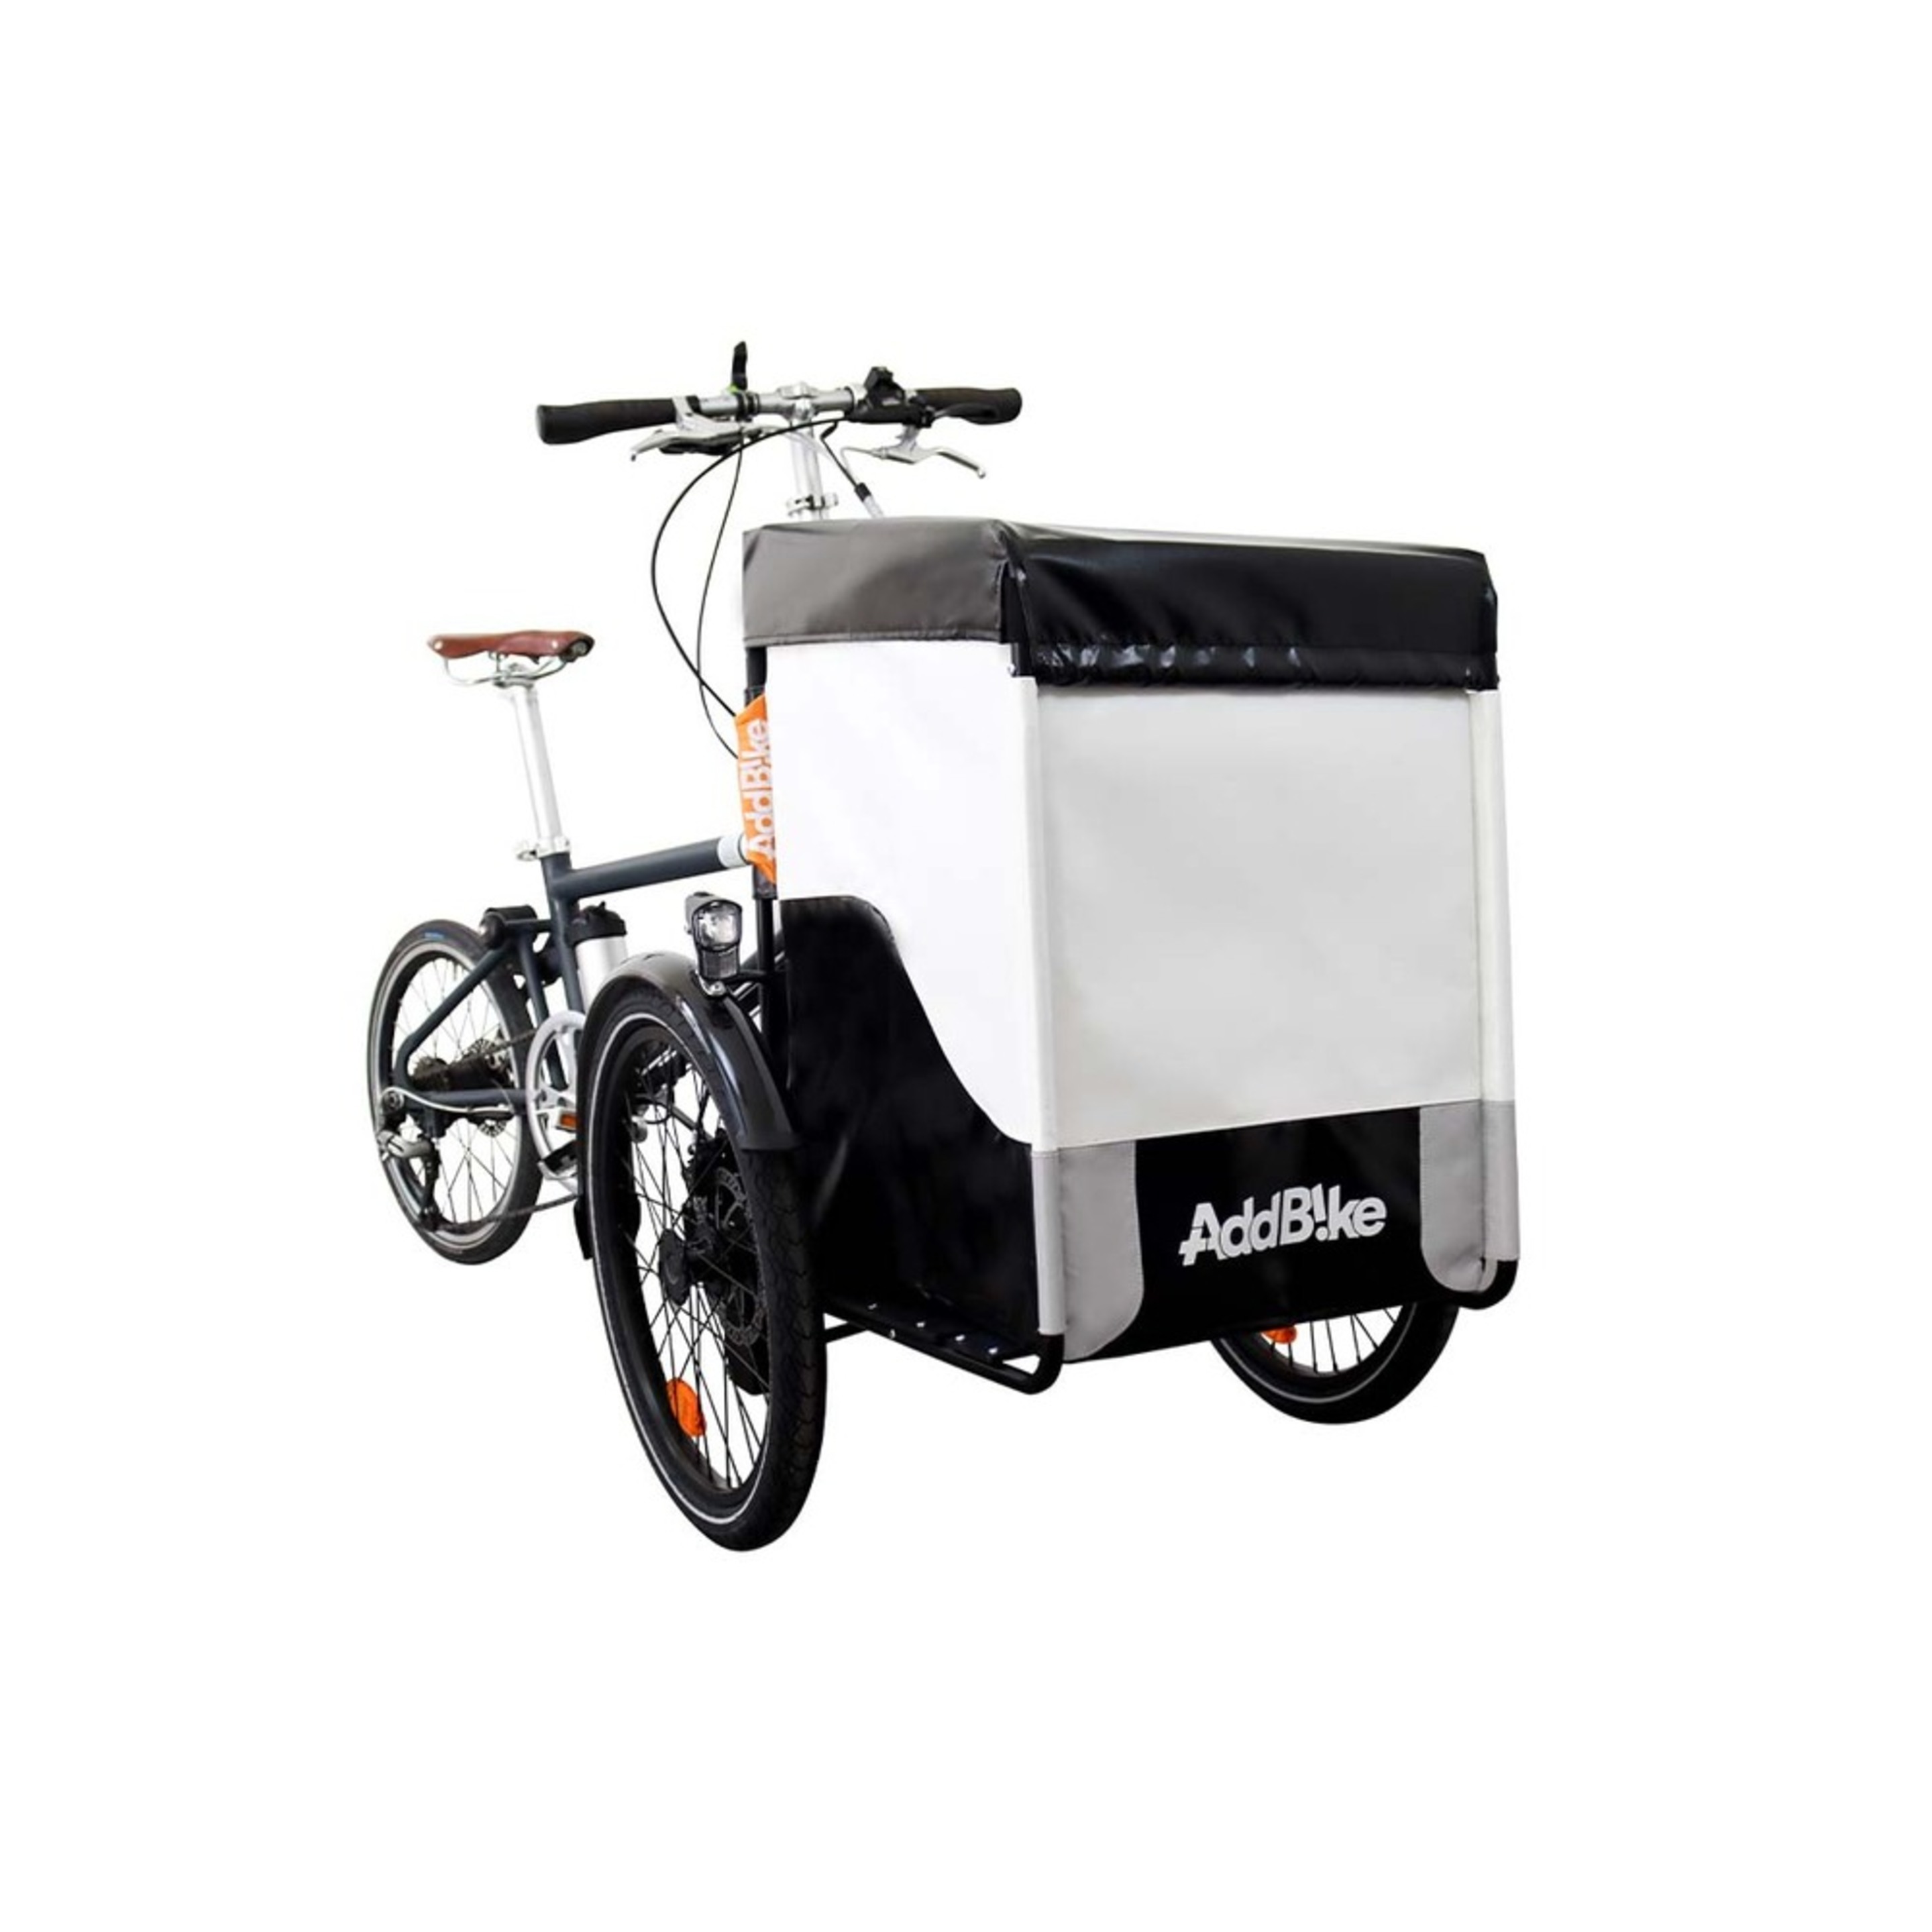 Kit Frontal: Transporte De Carga - Addbike Box Kit - gris-negro - 